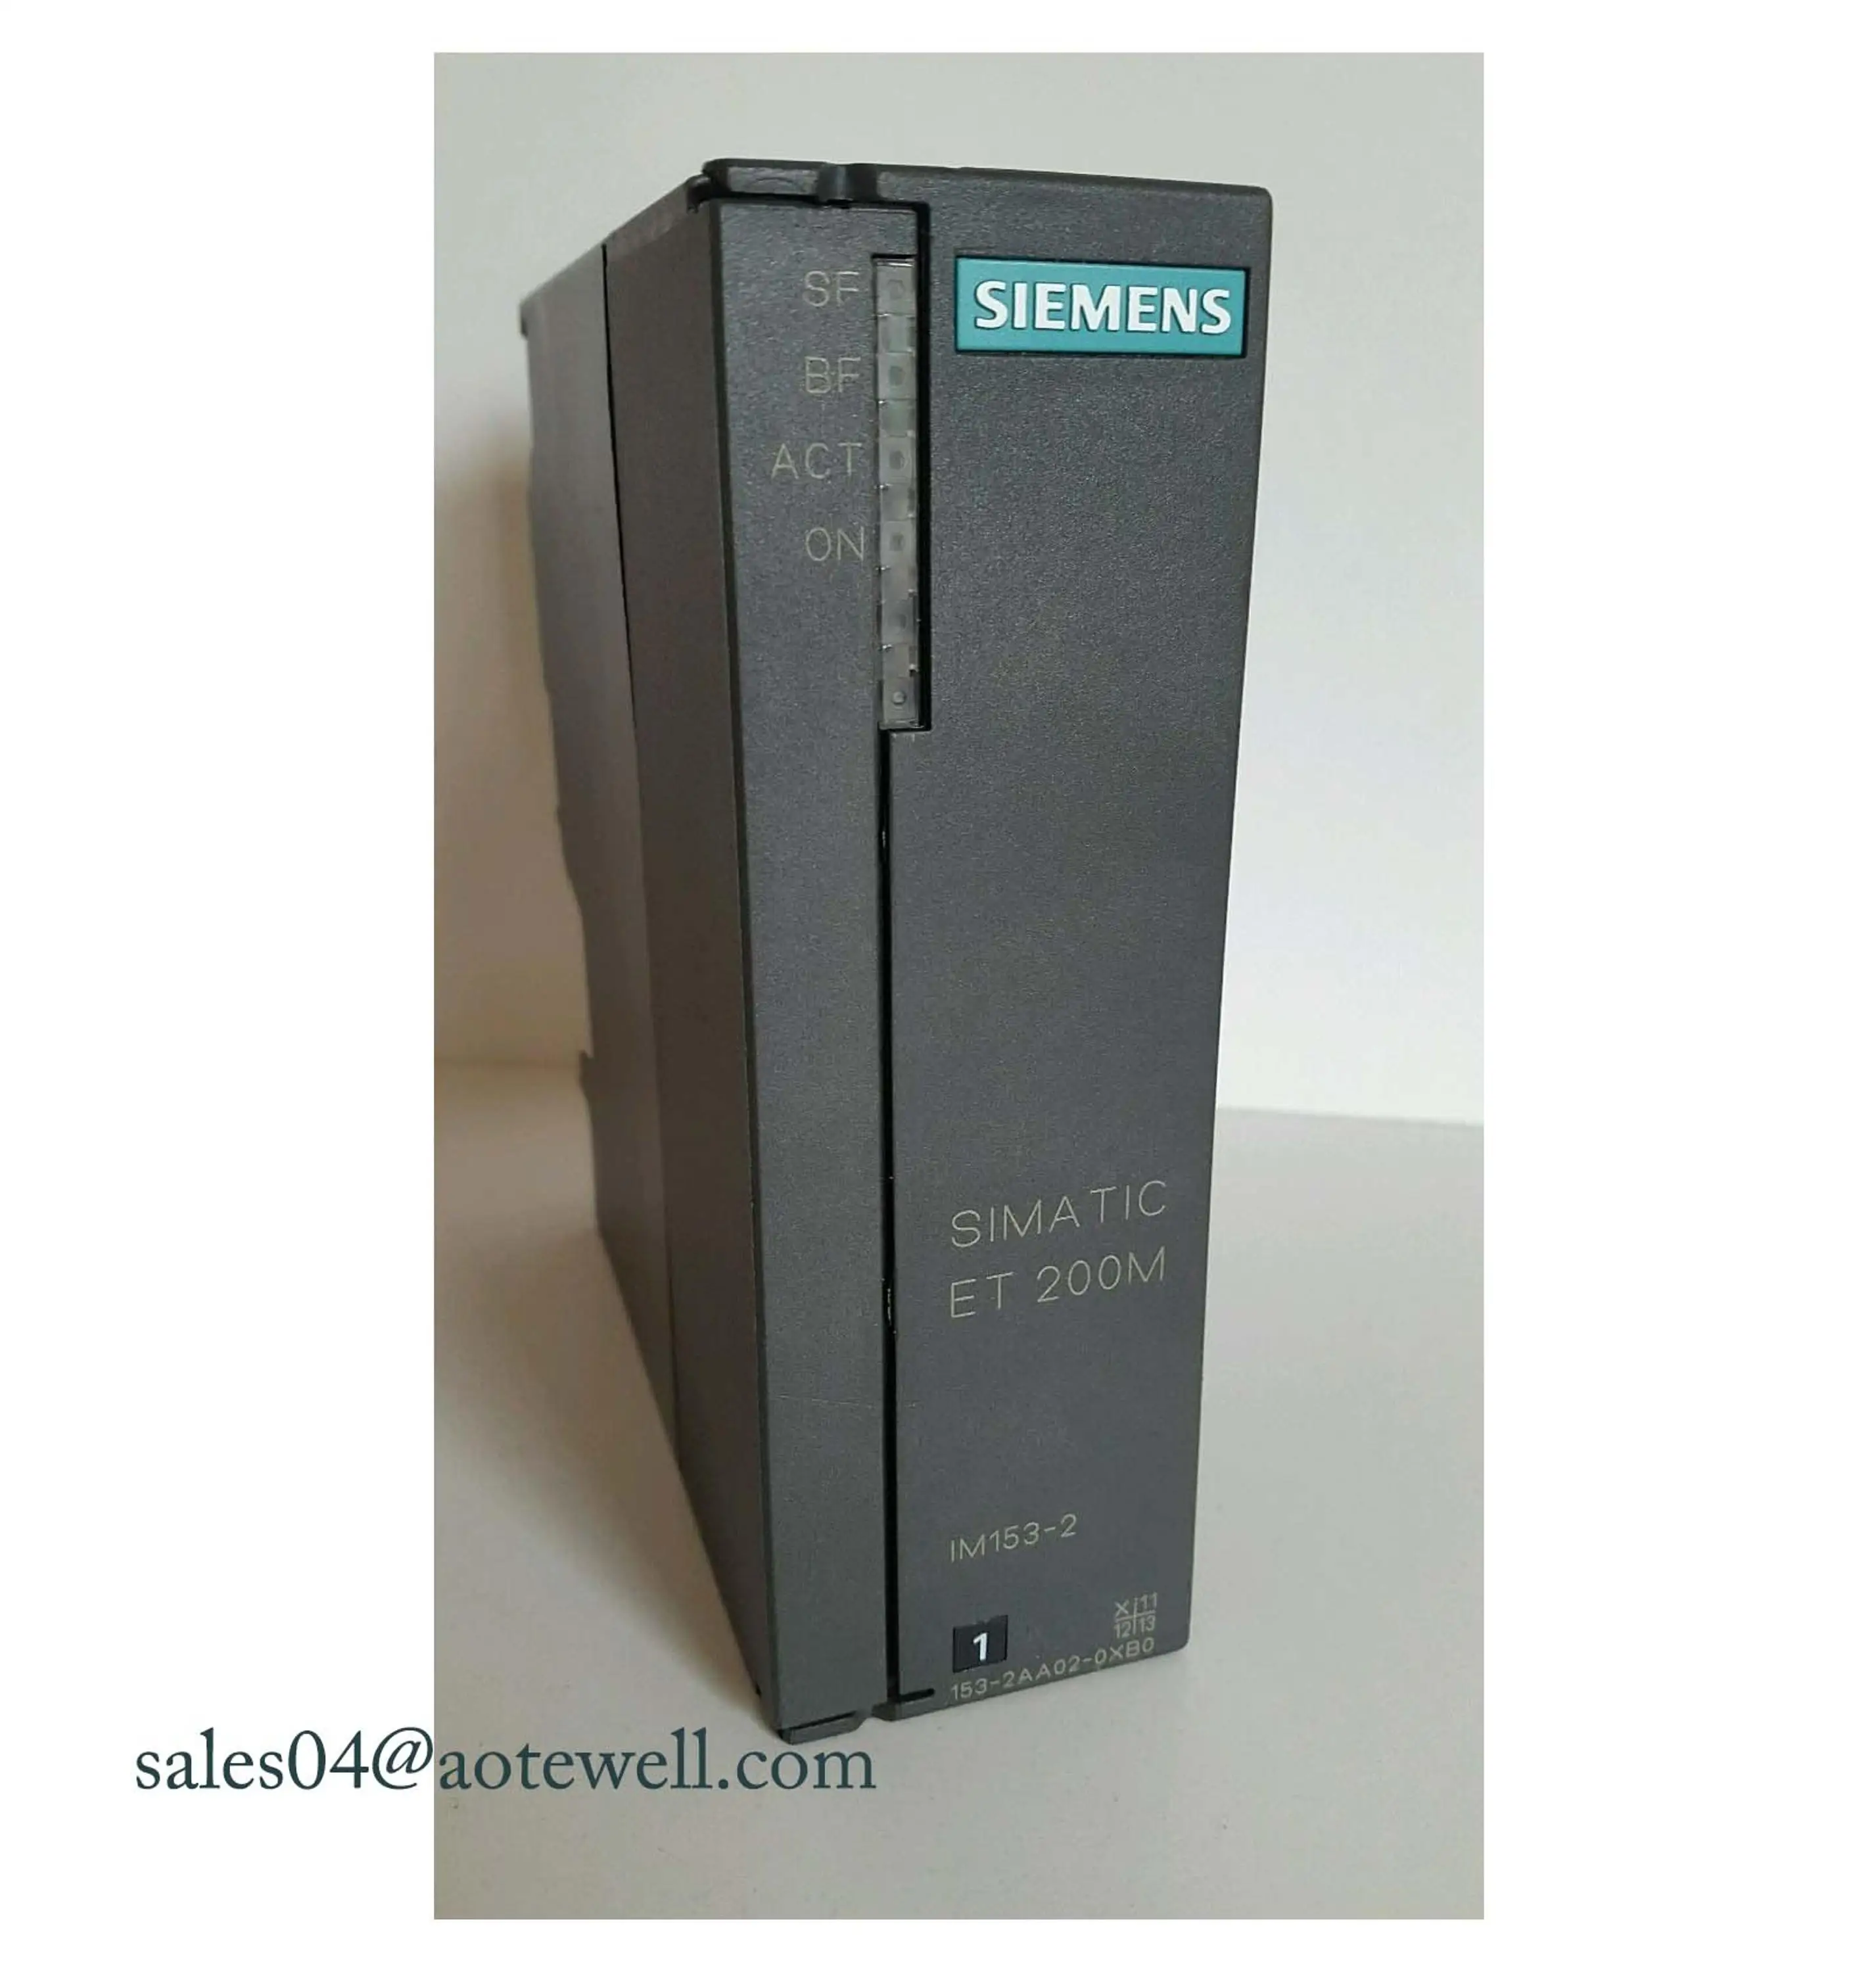 6es7153 2aa02 0xb0 Siemens Et 0m Interface Module Simatic Dp Buy Siemens 6es7153 2aa02 0xb0 Siemens Et 0m Interface Module Product On Alibaba Com